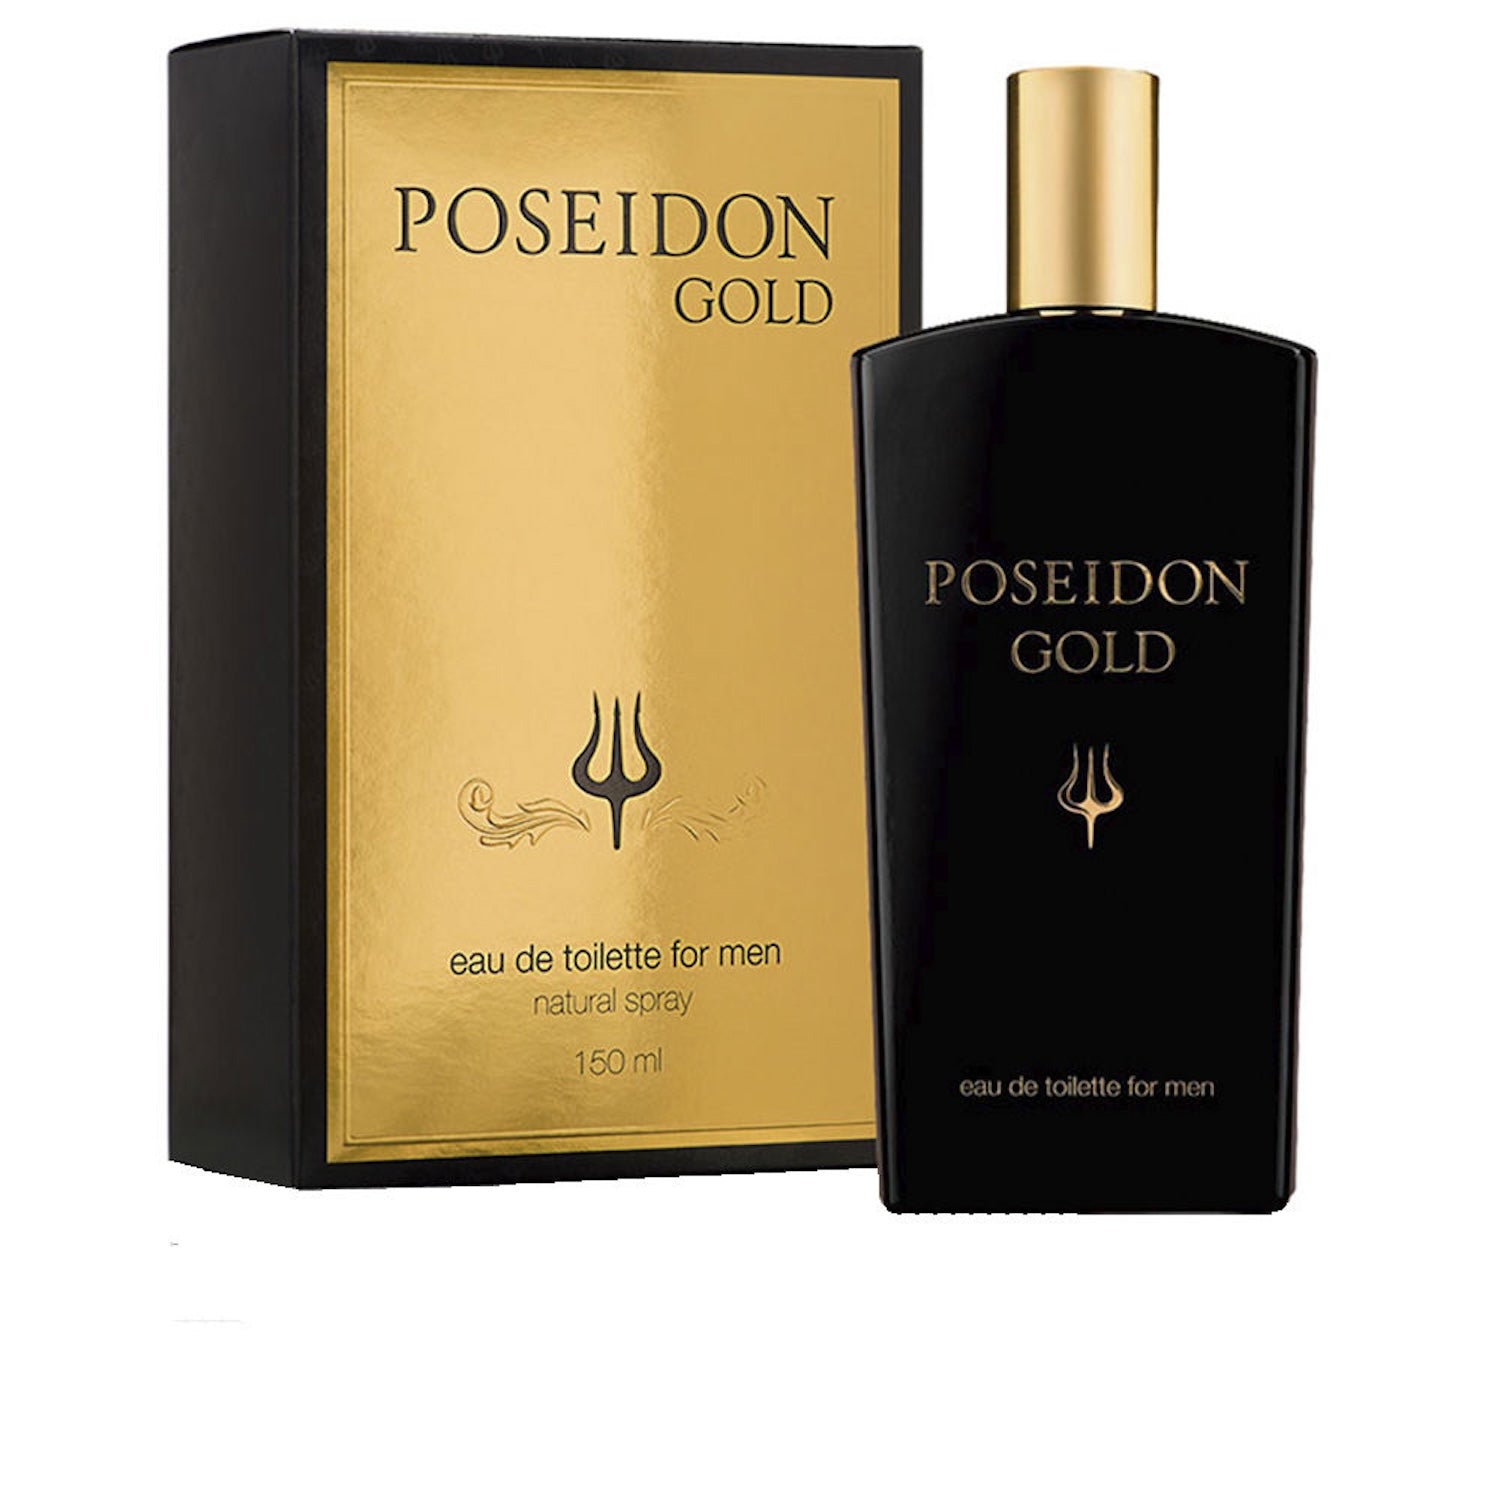 POSEIDON GOLD FOR MEN Eau de Toilette Spray